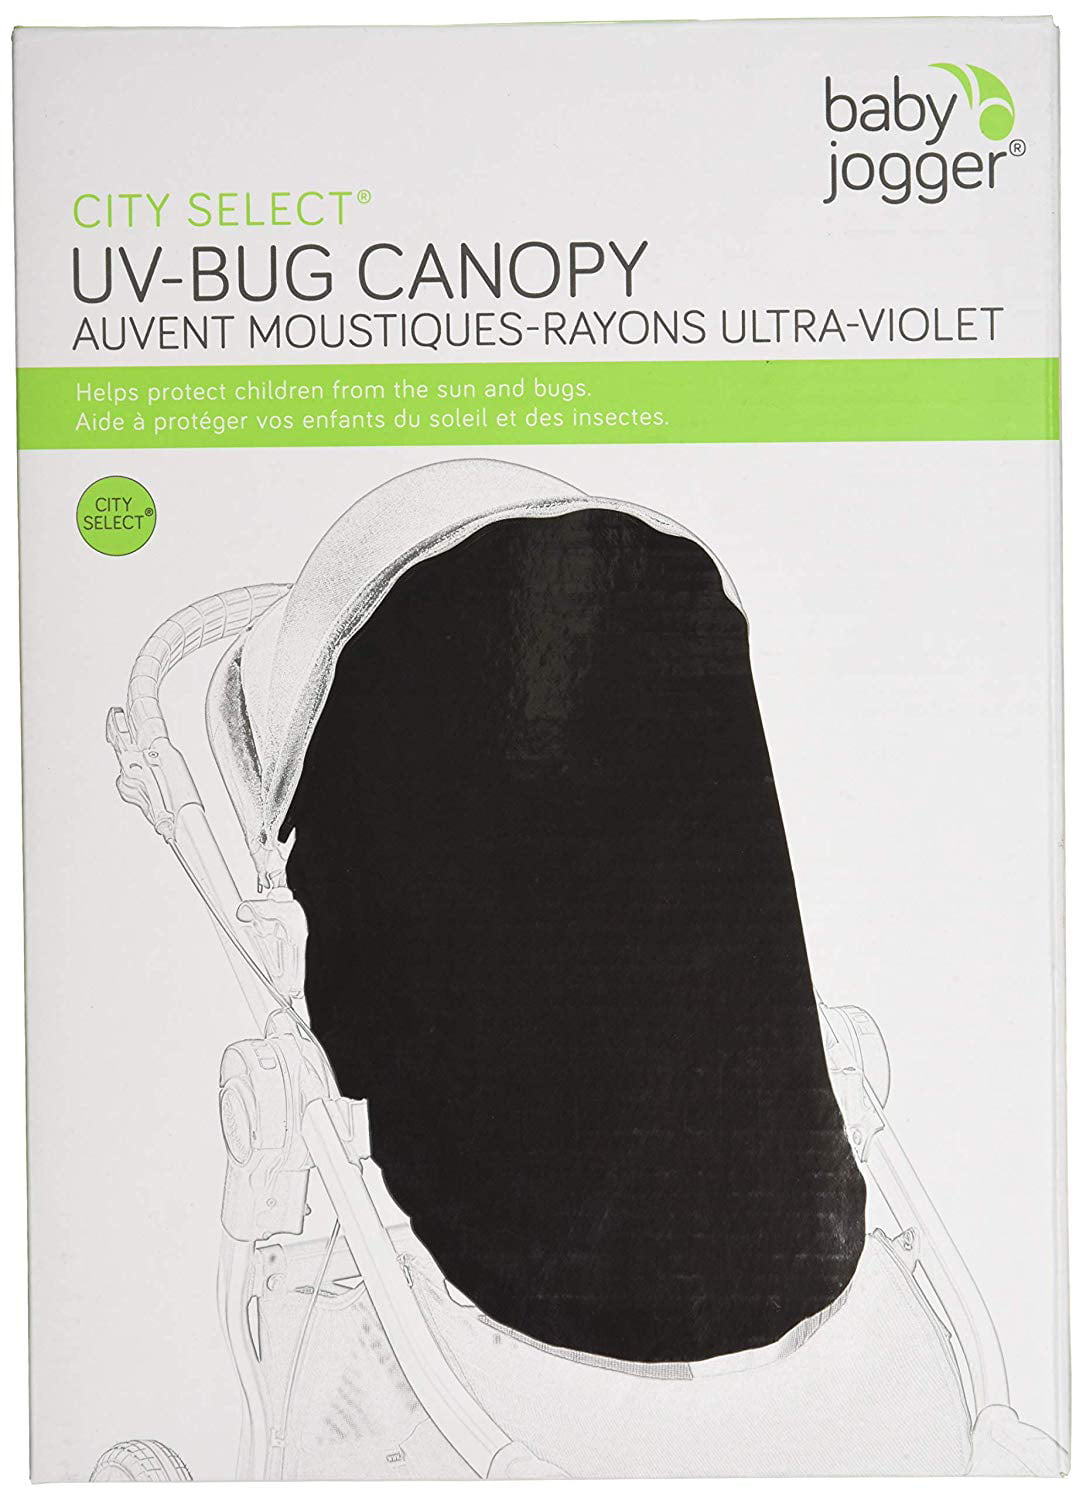 city select uv bug canopy